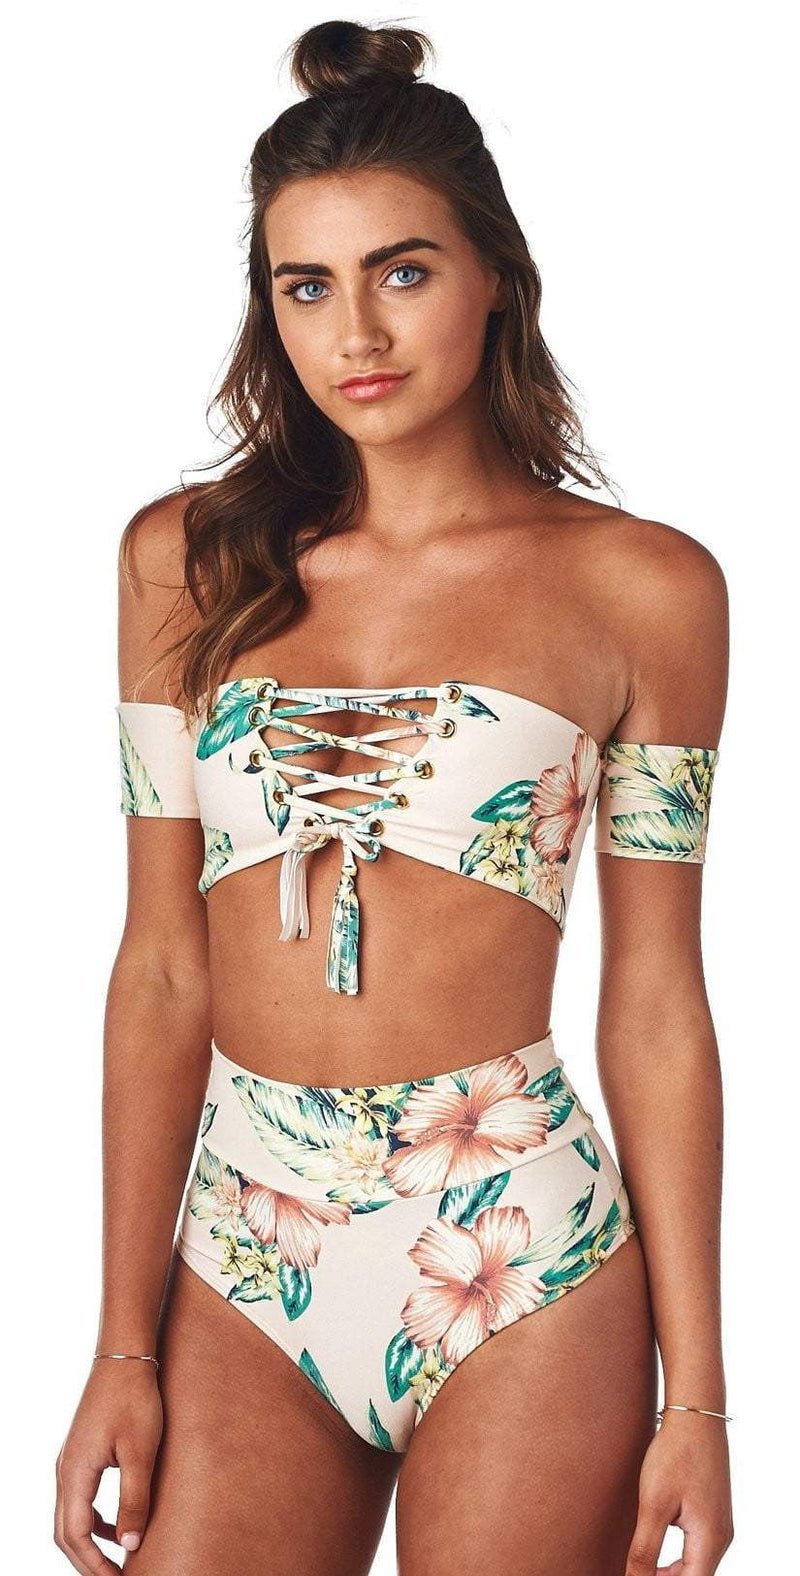 South Beach Swimsuits Montce Tommi Corset Top in Floral Print – South Beach  Swimsuits